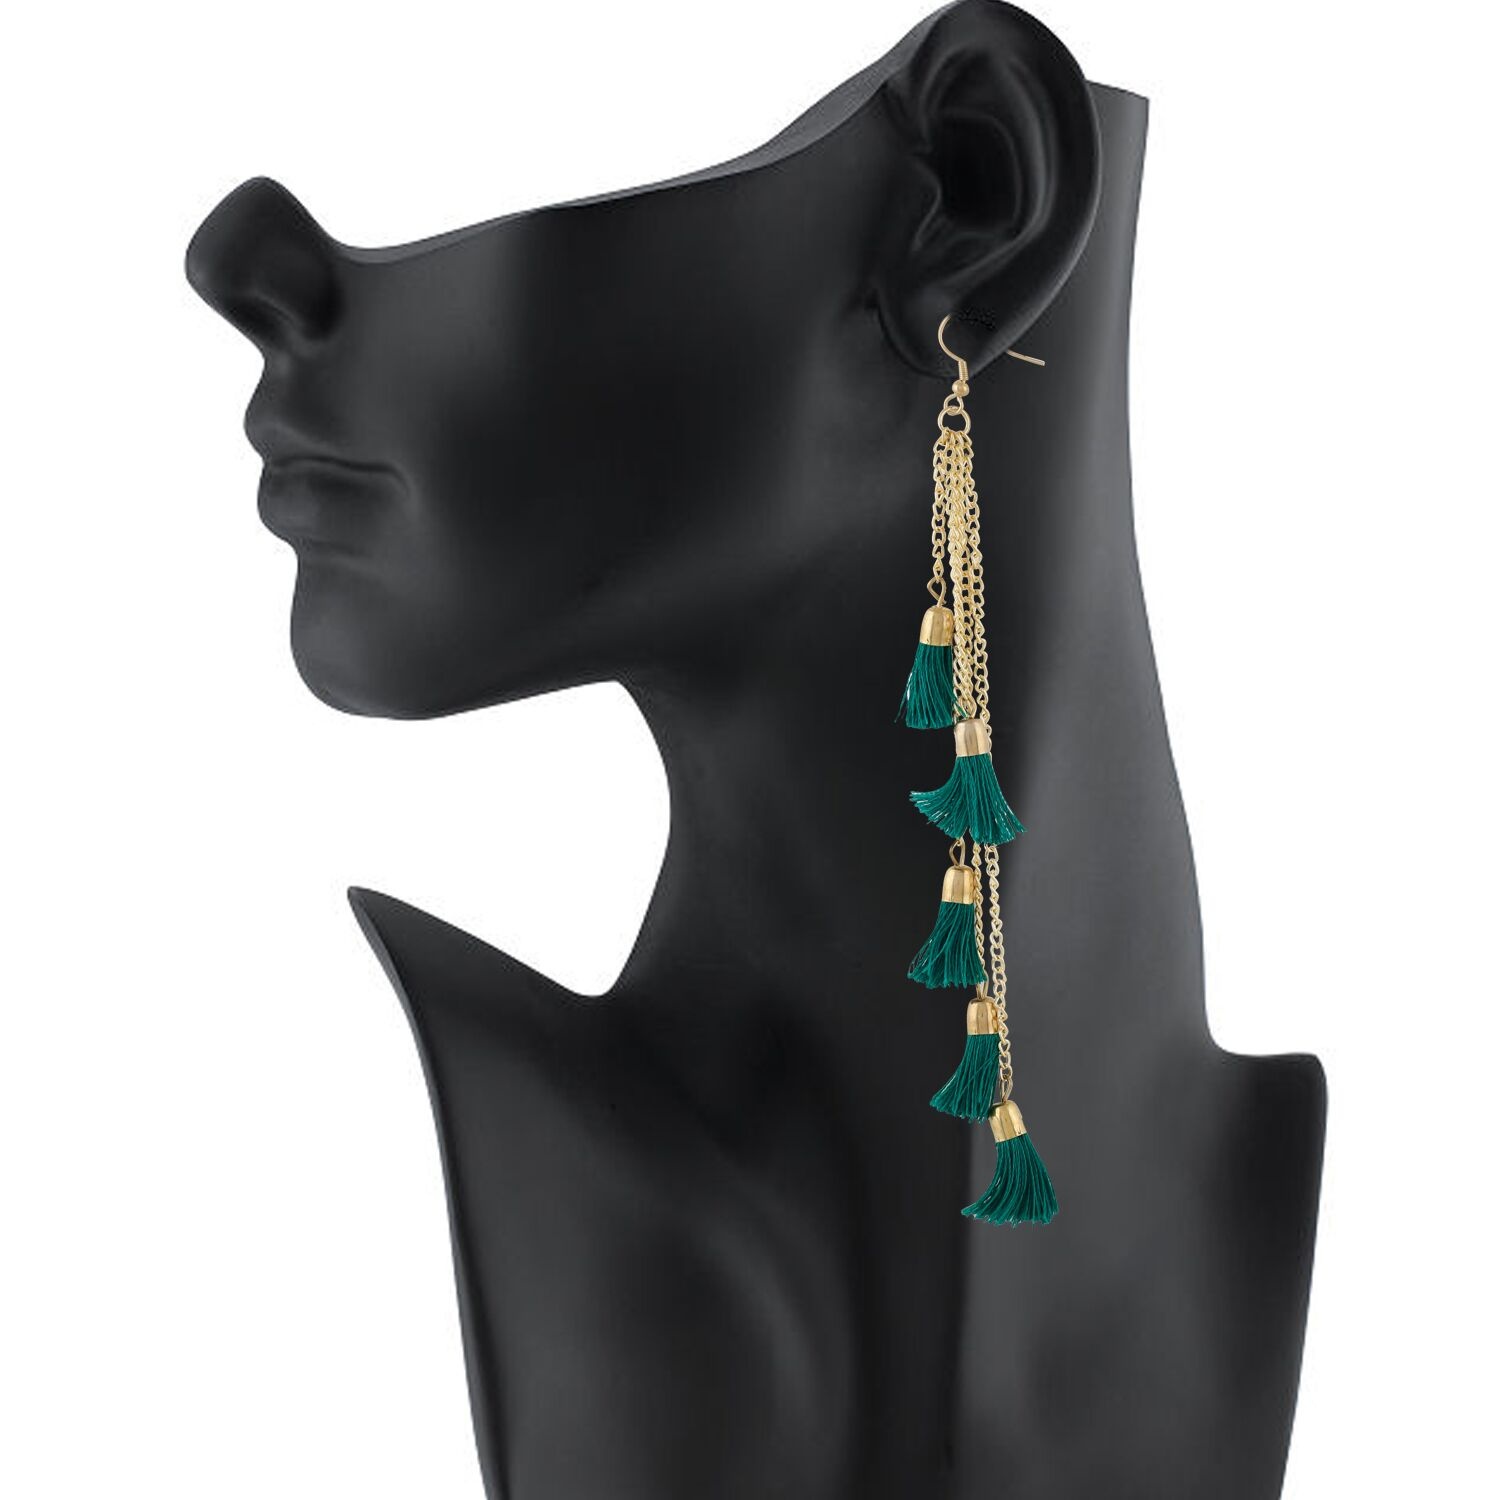 Generic Women's Golden plated Hook Dangler Hanging Earrings-Green